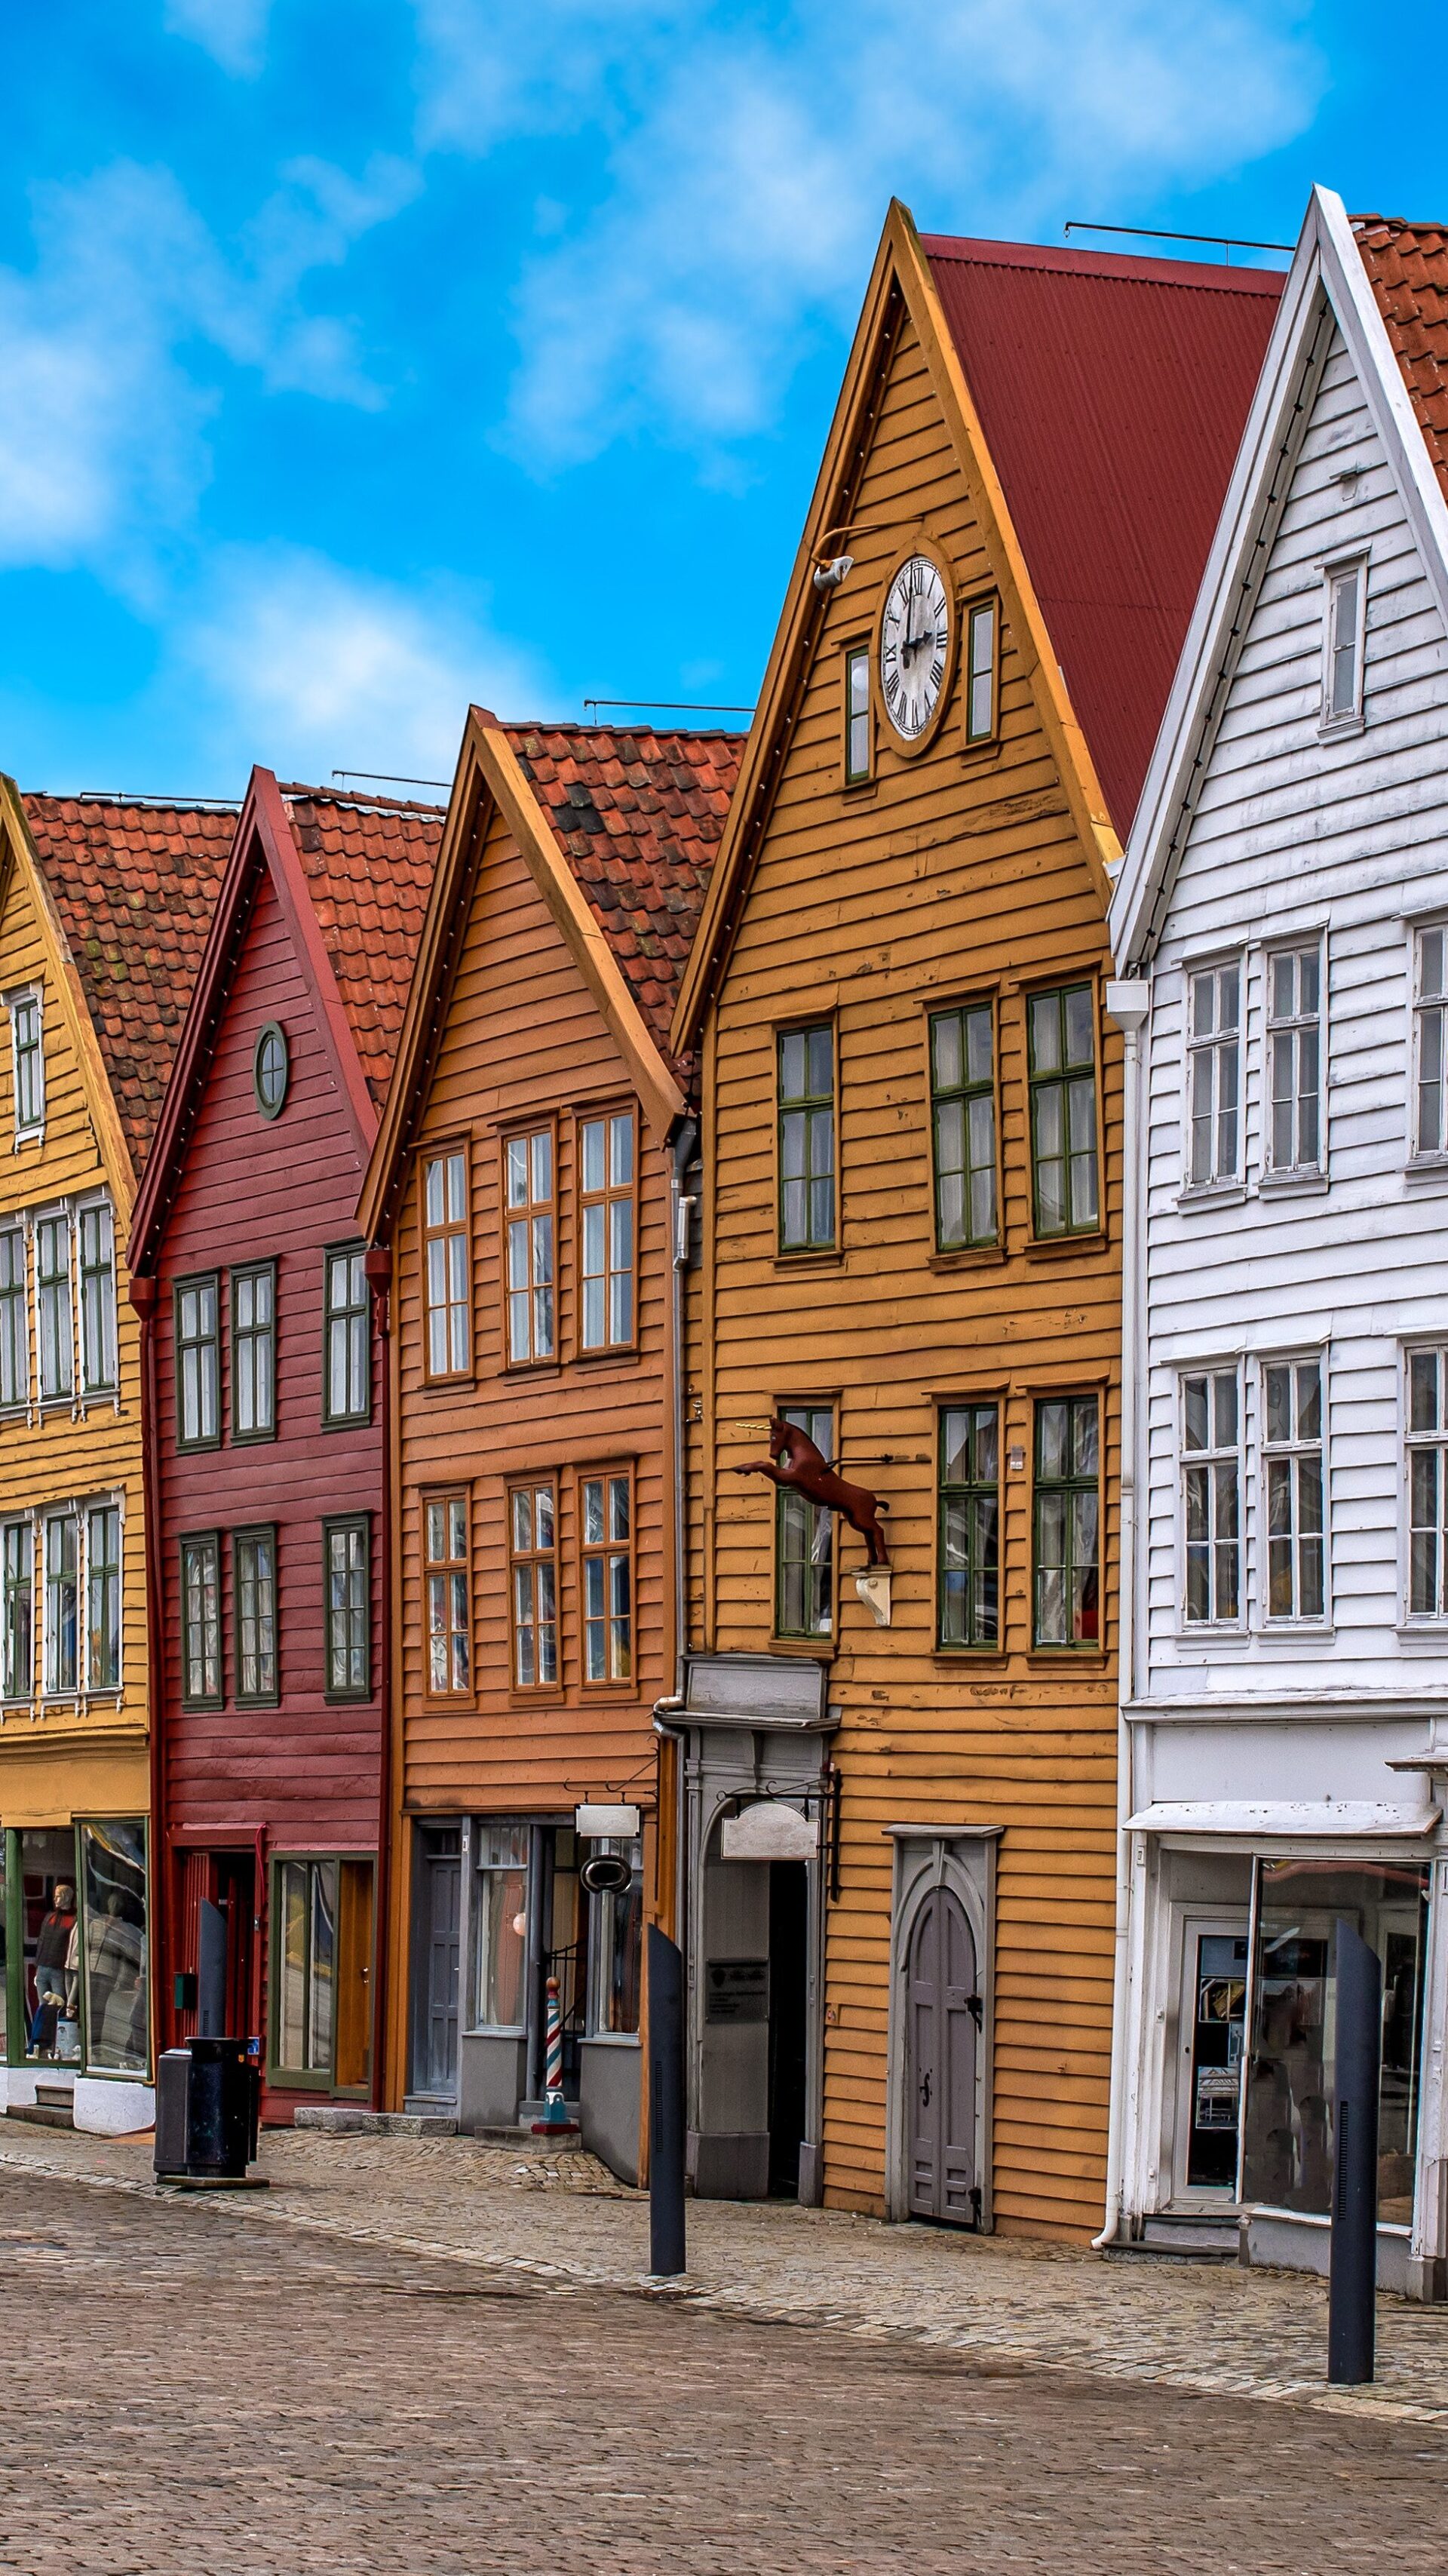 Bergen-scaled-aspect-ratio-9-16